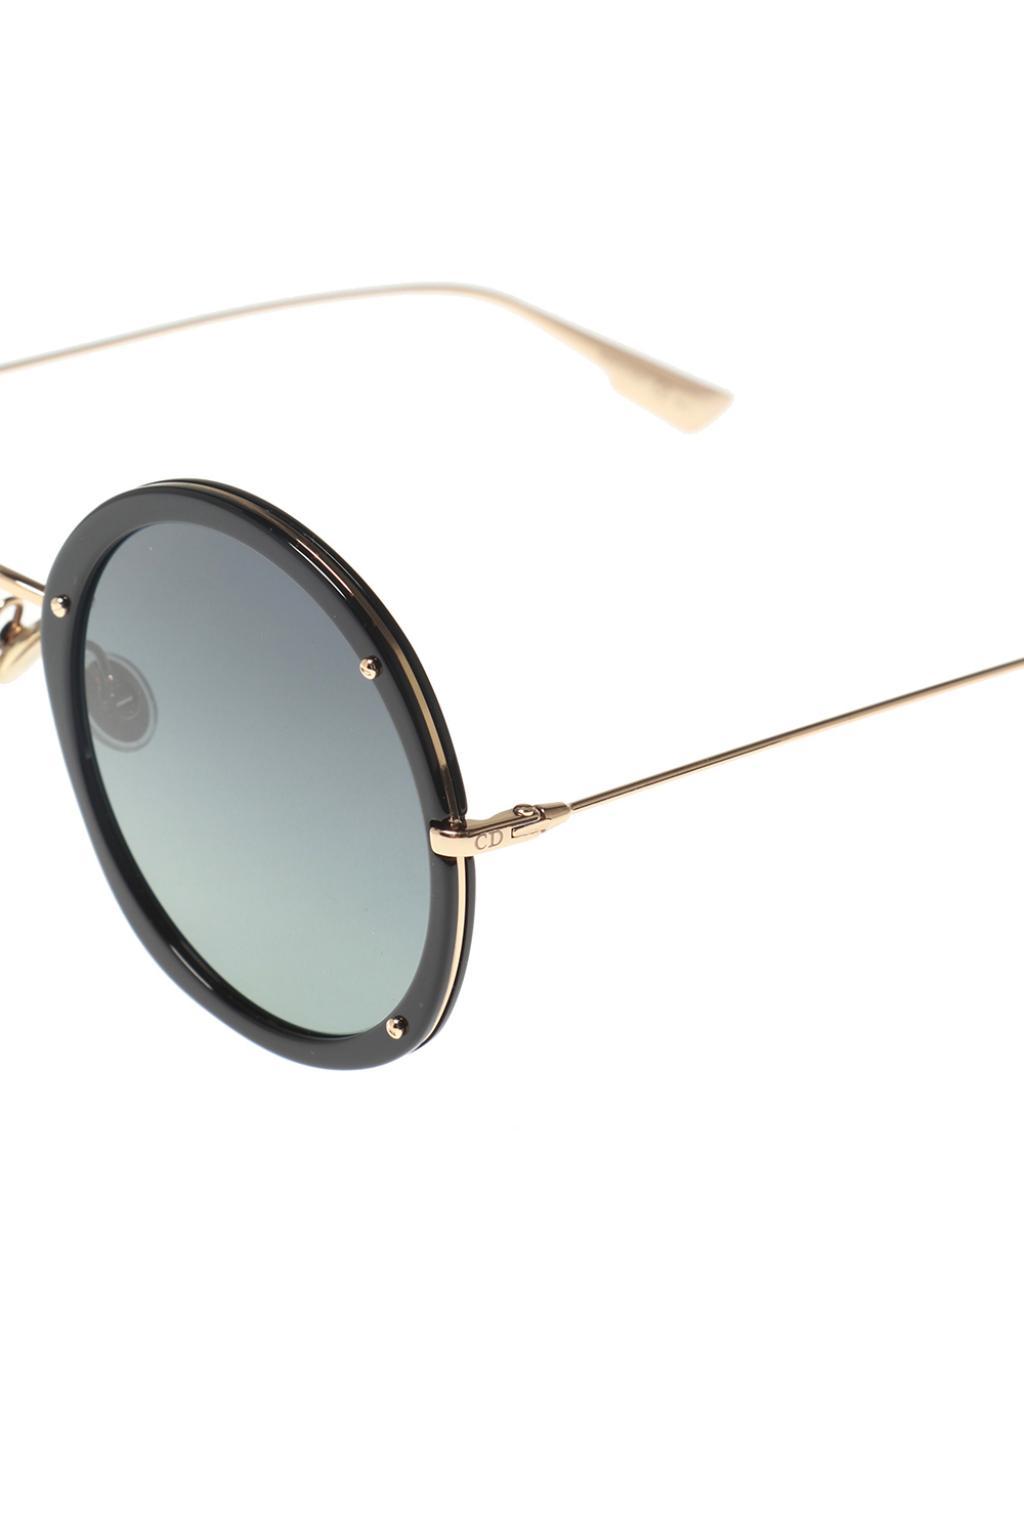 Dior 'hypnotic 1' Sunglasses in Black | Lyst